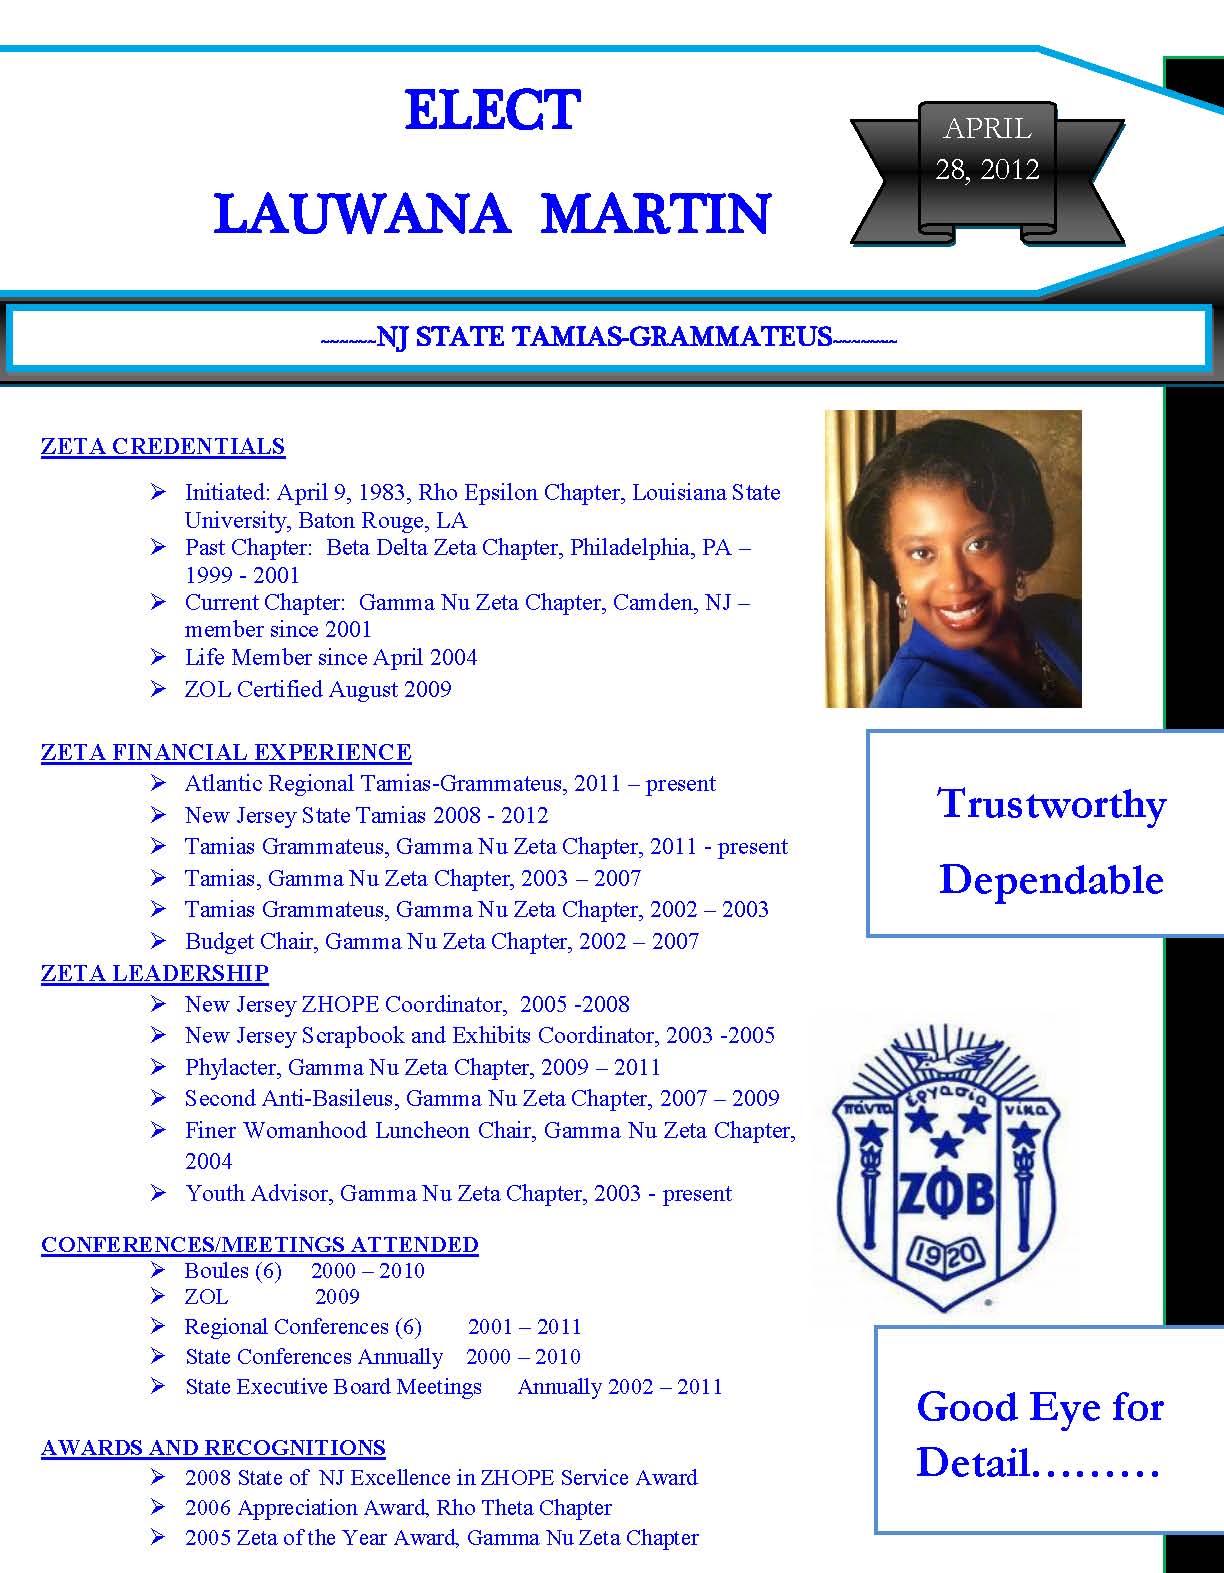 Lauwana Martin